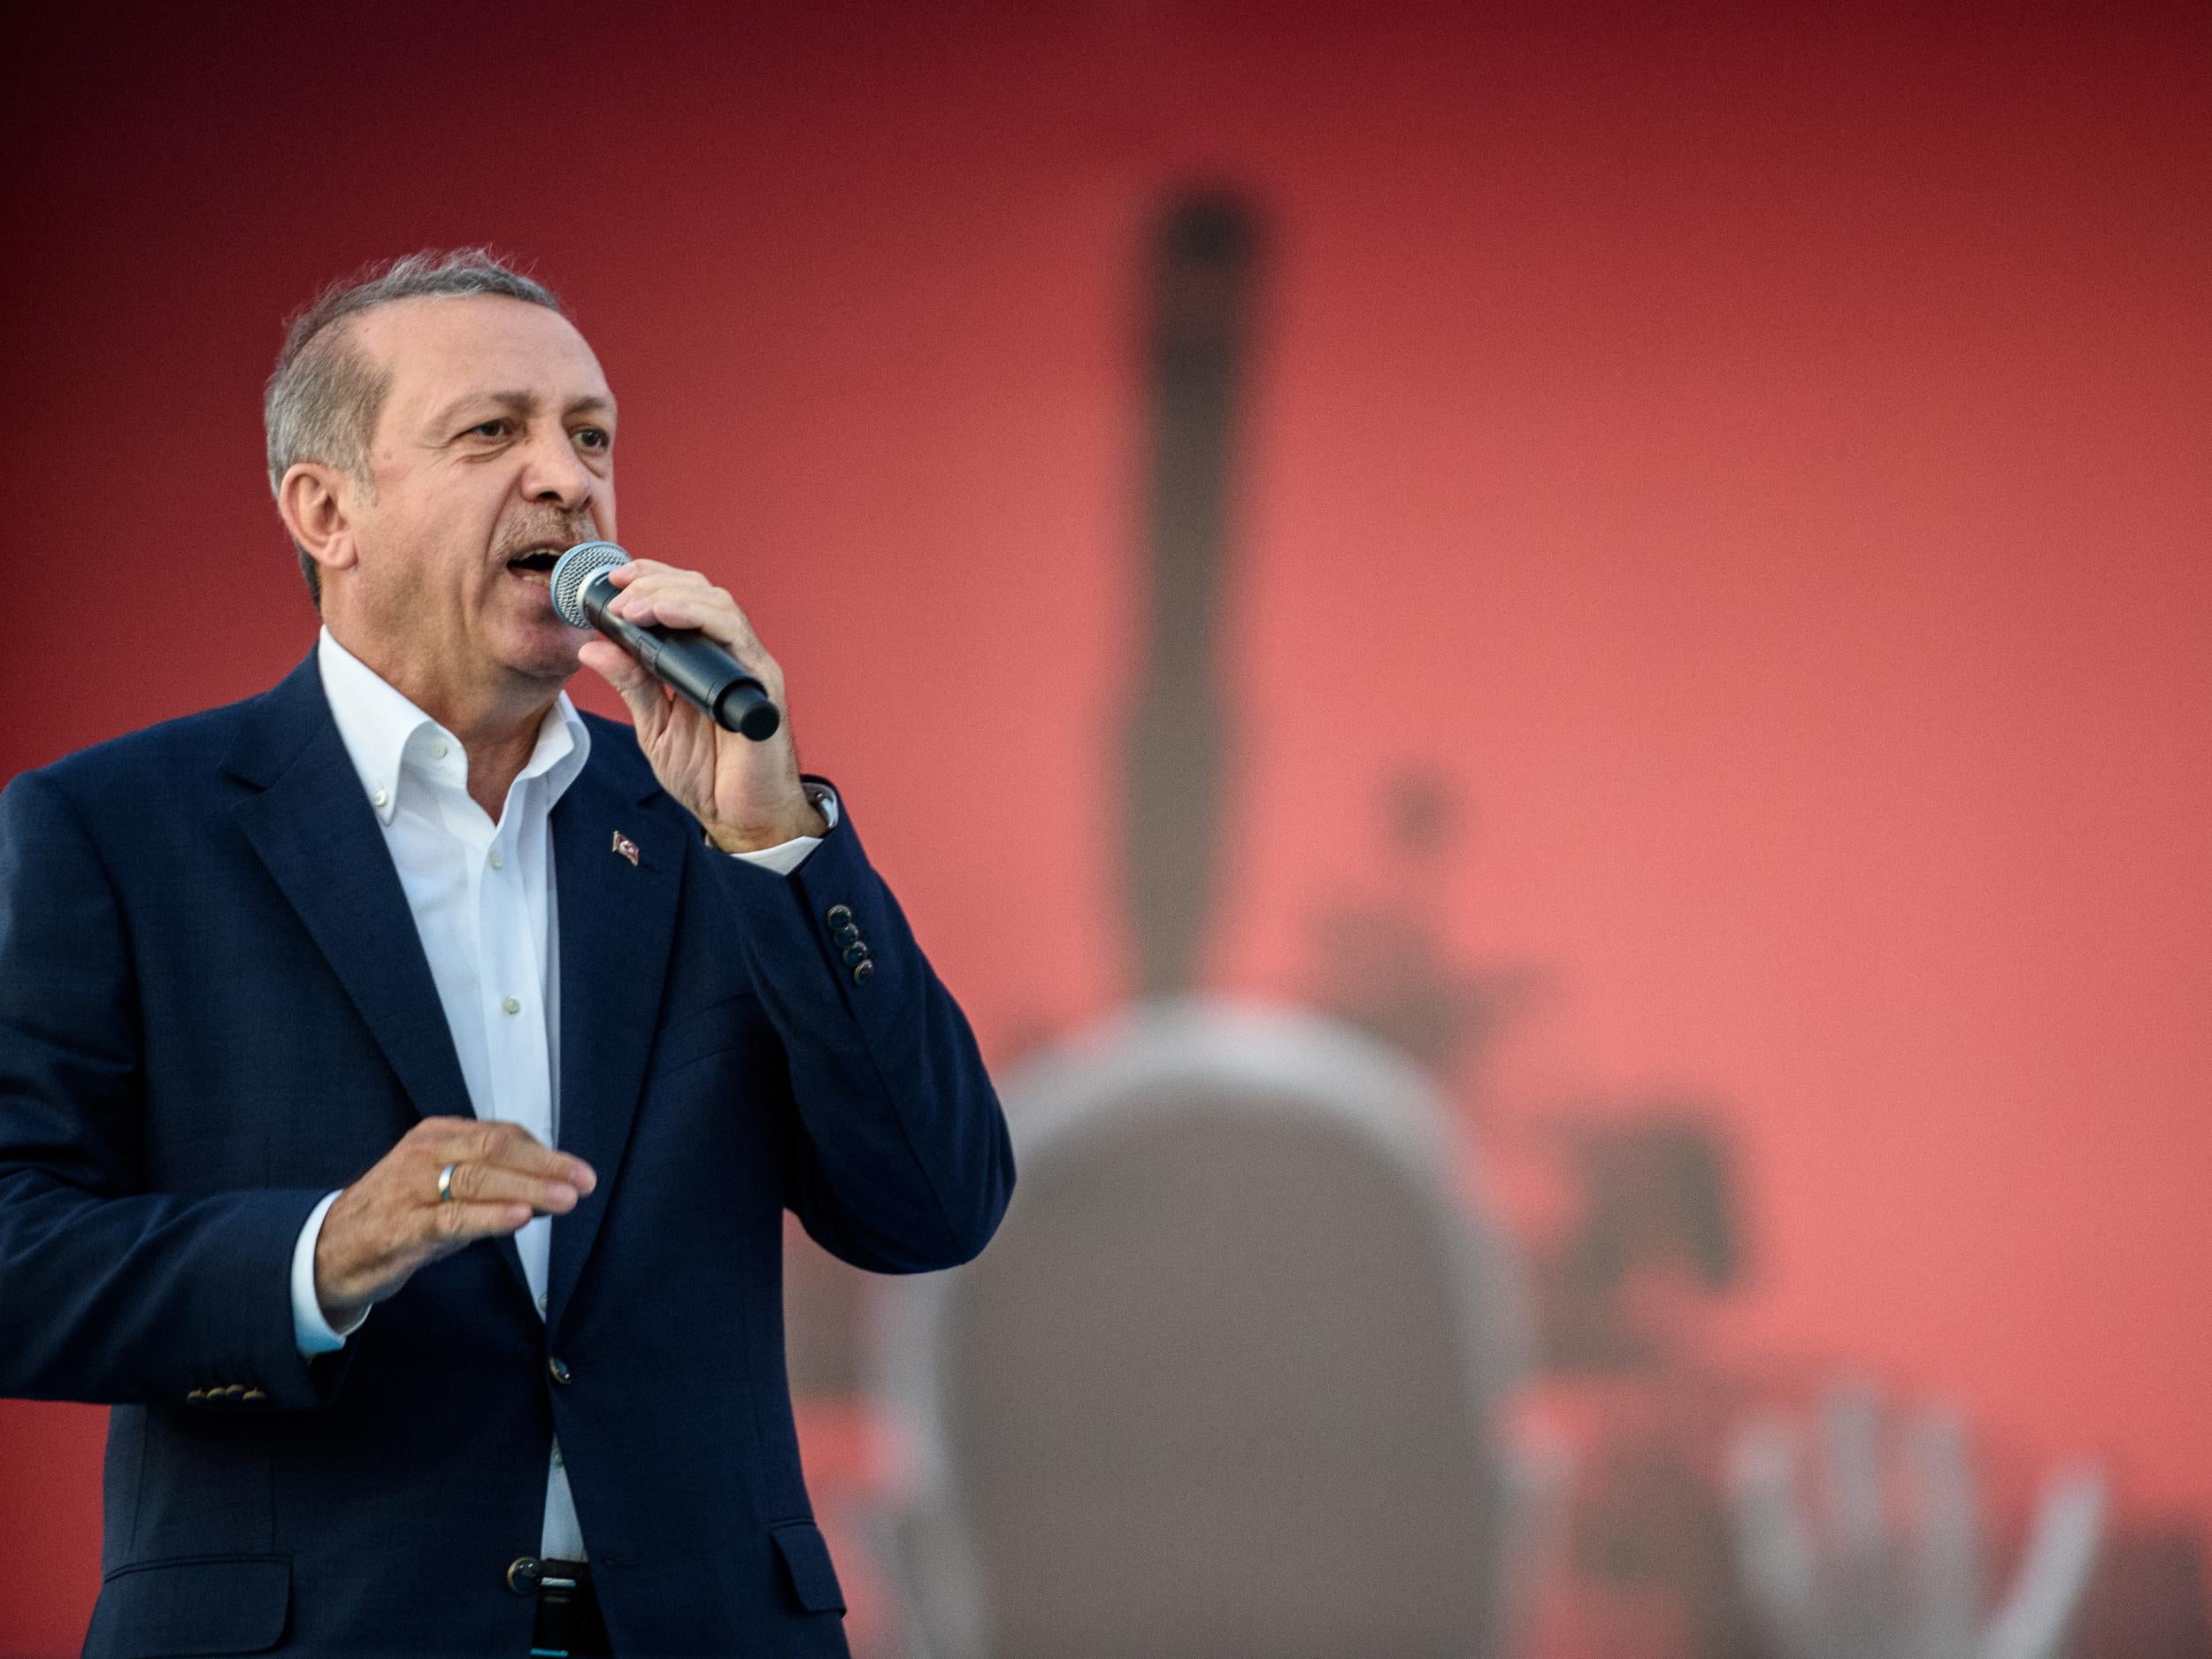 President Erdogan praised Donald Trump's actions, saying he treats media critics in the same way